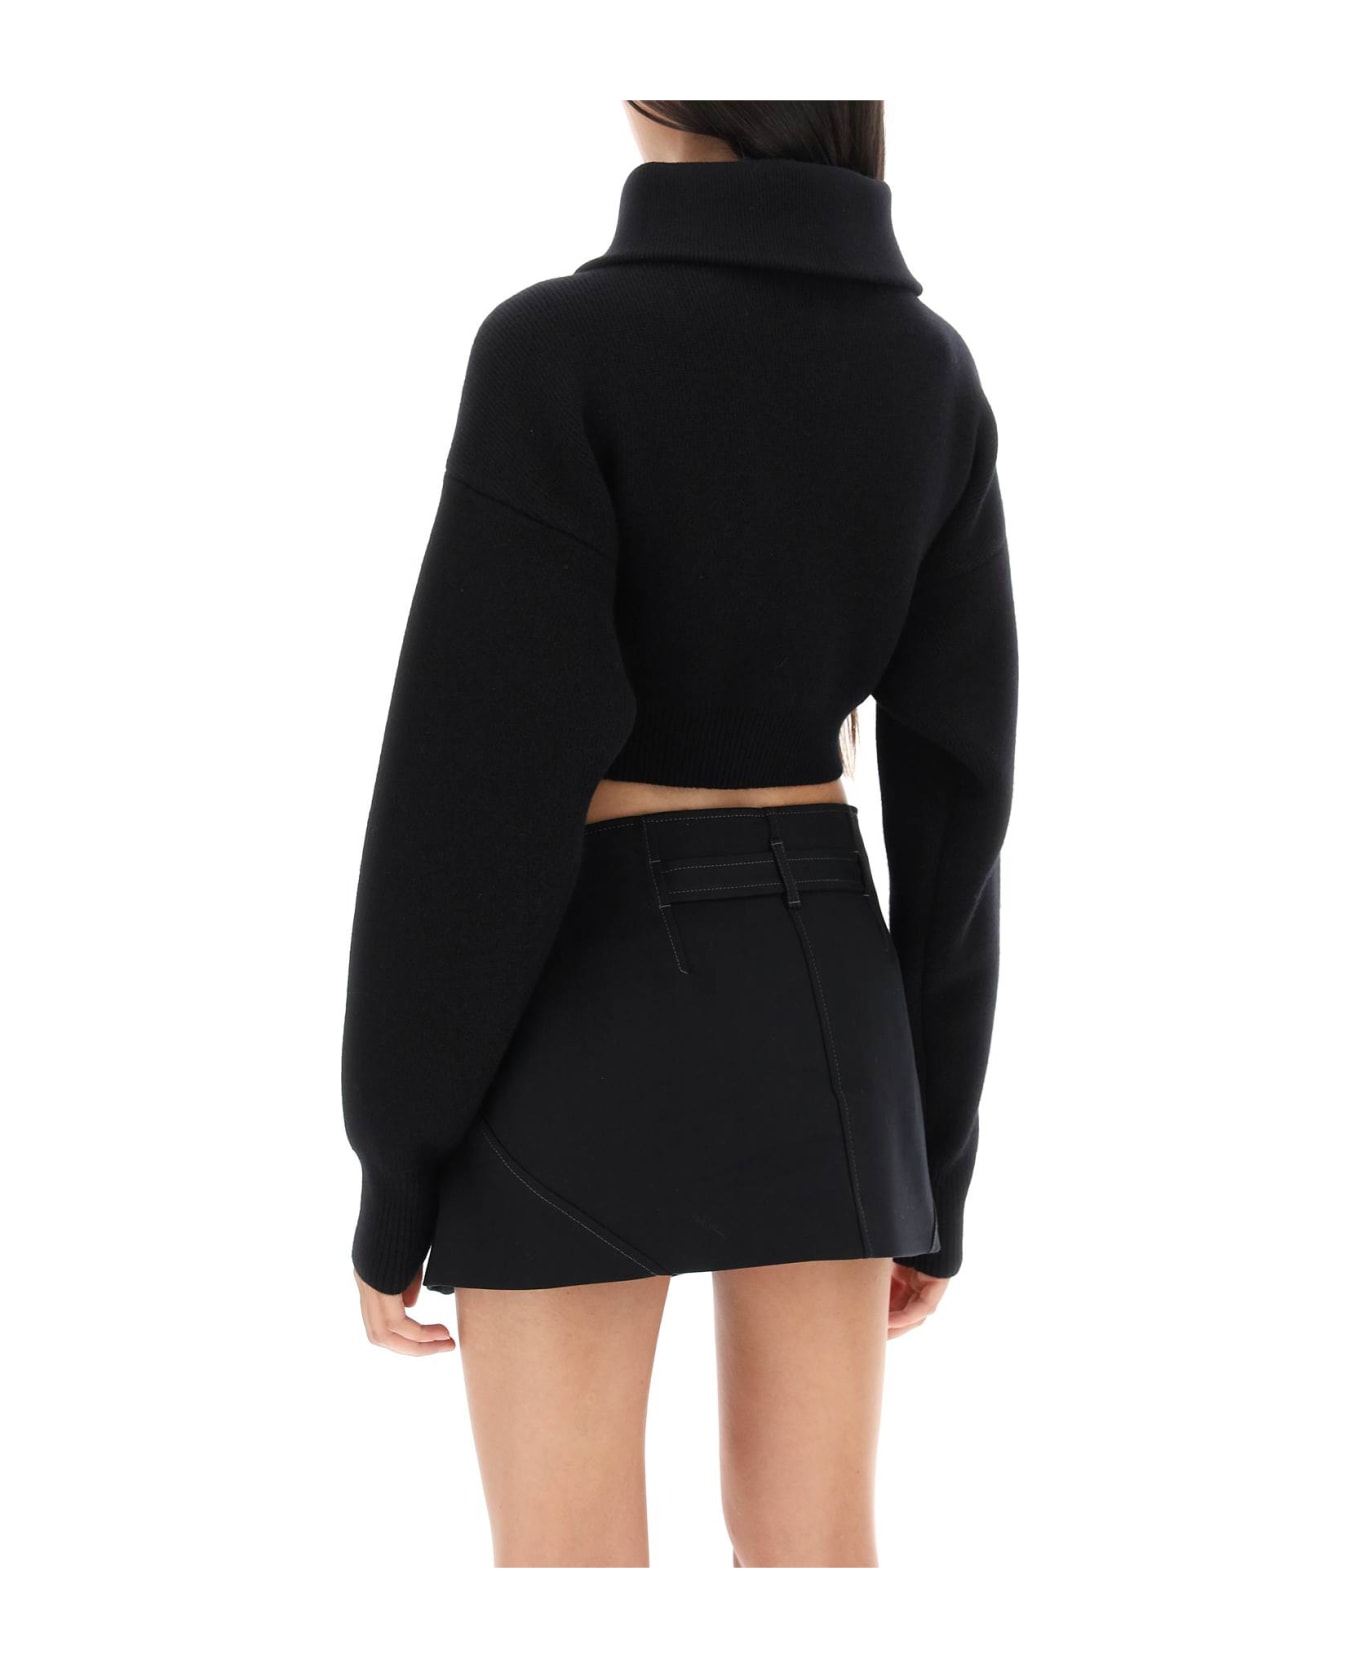 Coperni Half Zip Cropped Boxy Wool Sweater - Black